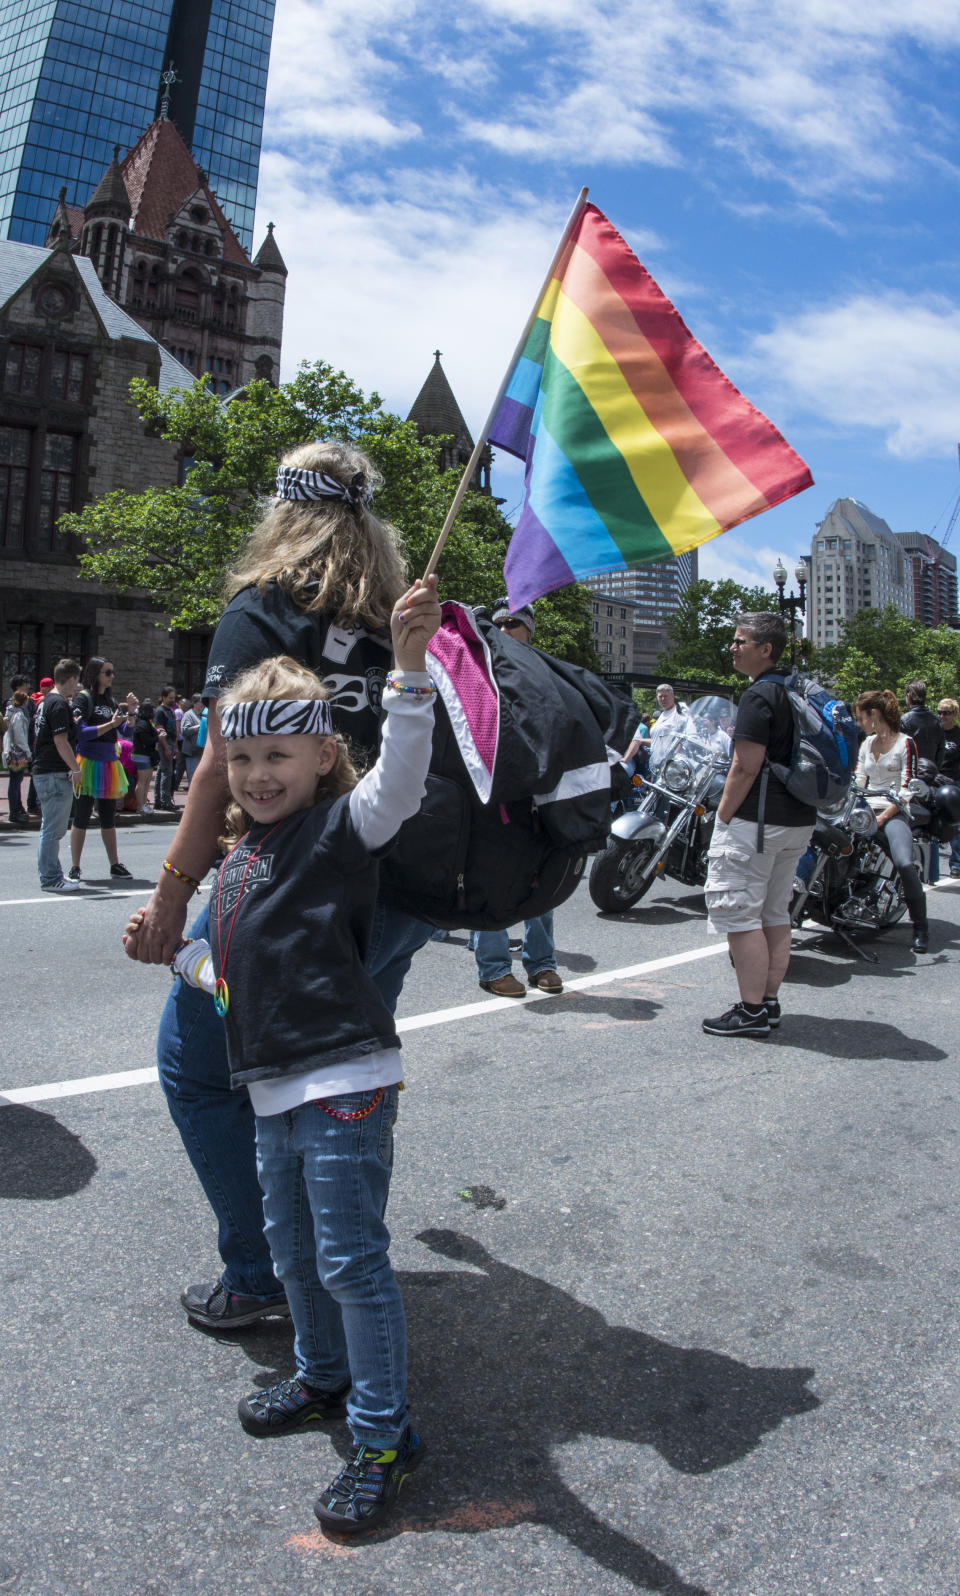 People take part in the Boston Pride parade in Boston, Massachusetts, on June 8, 2013. (Photo by Rick Friedman/rickfriedman.com/Corbis via Getty Images)